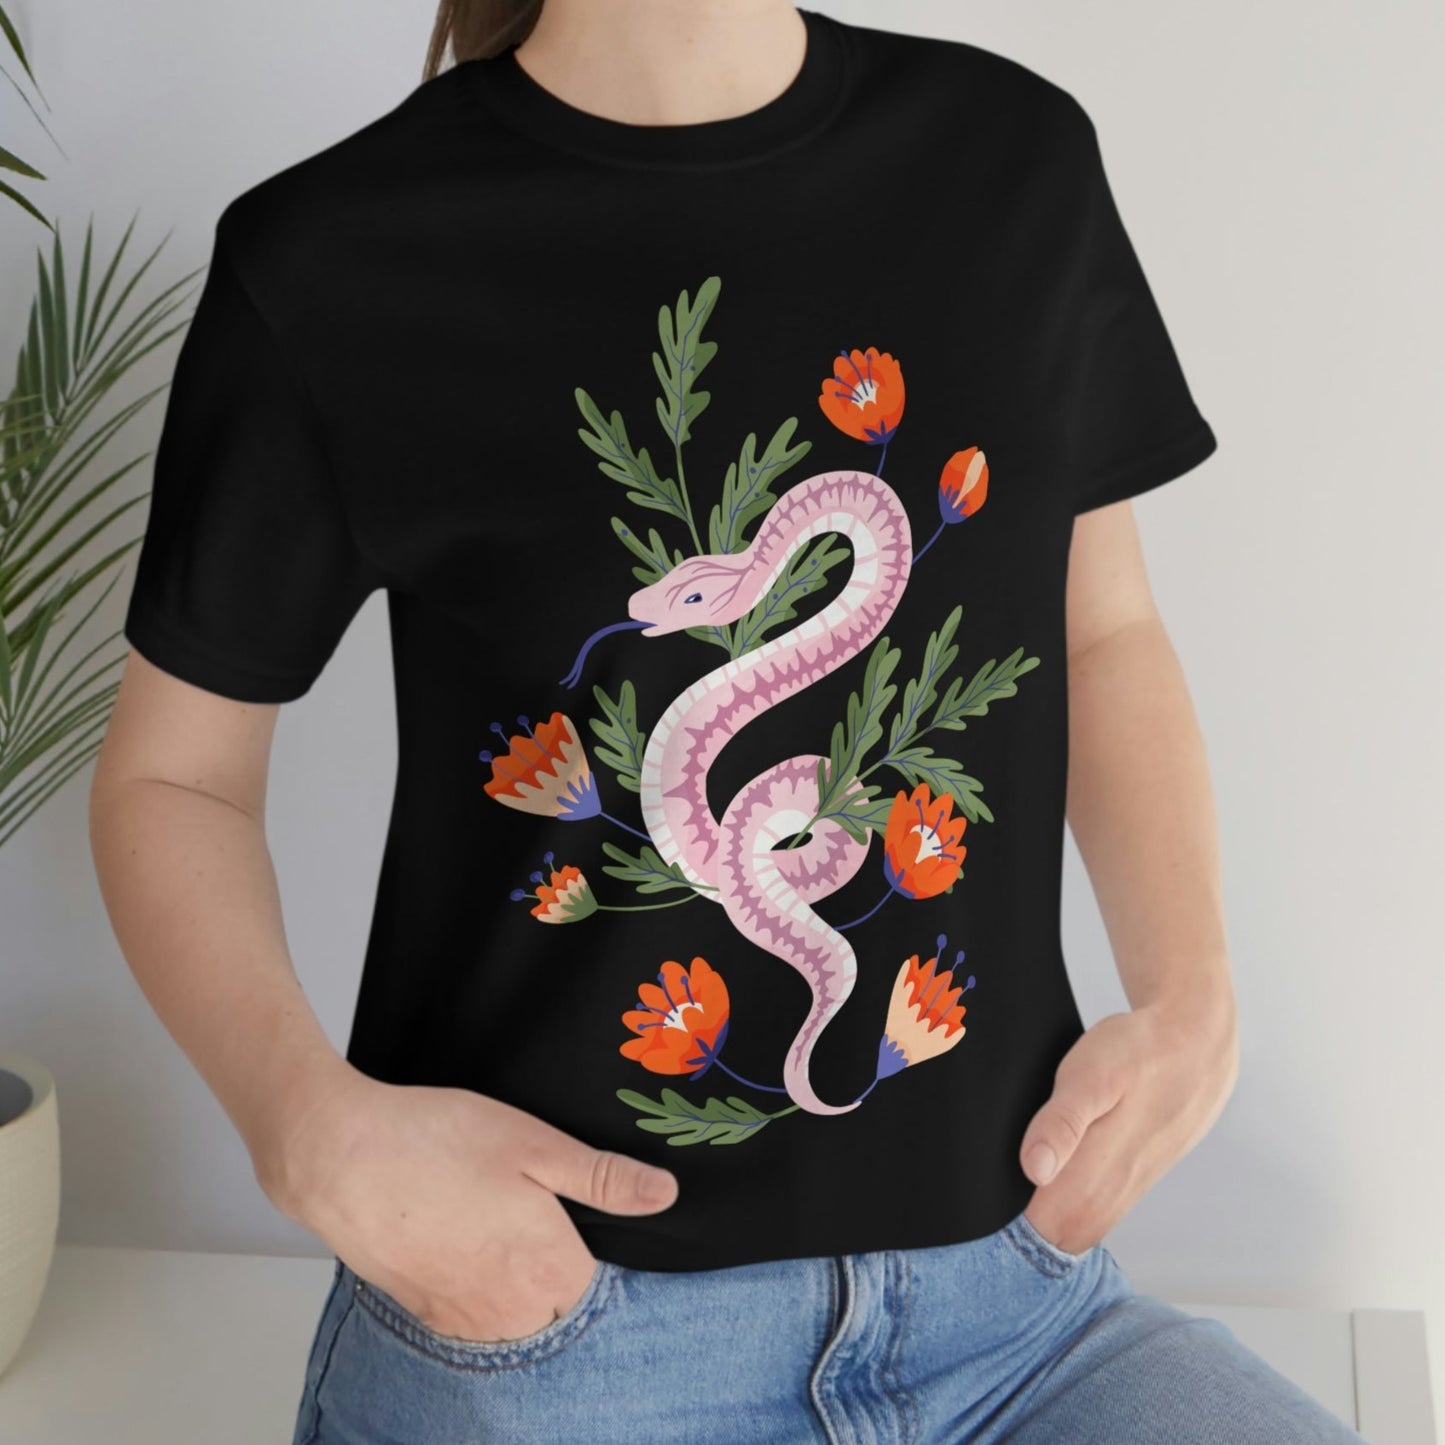 Pink Snake with Red-Orange Flowers Black T-Shirt, Unisex Jersey Short Sleeve Tee